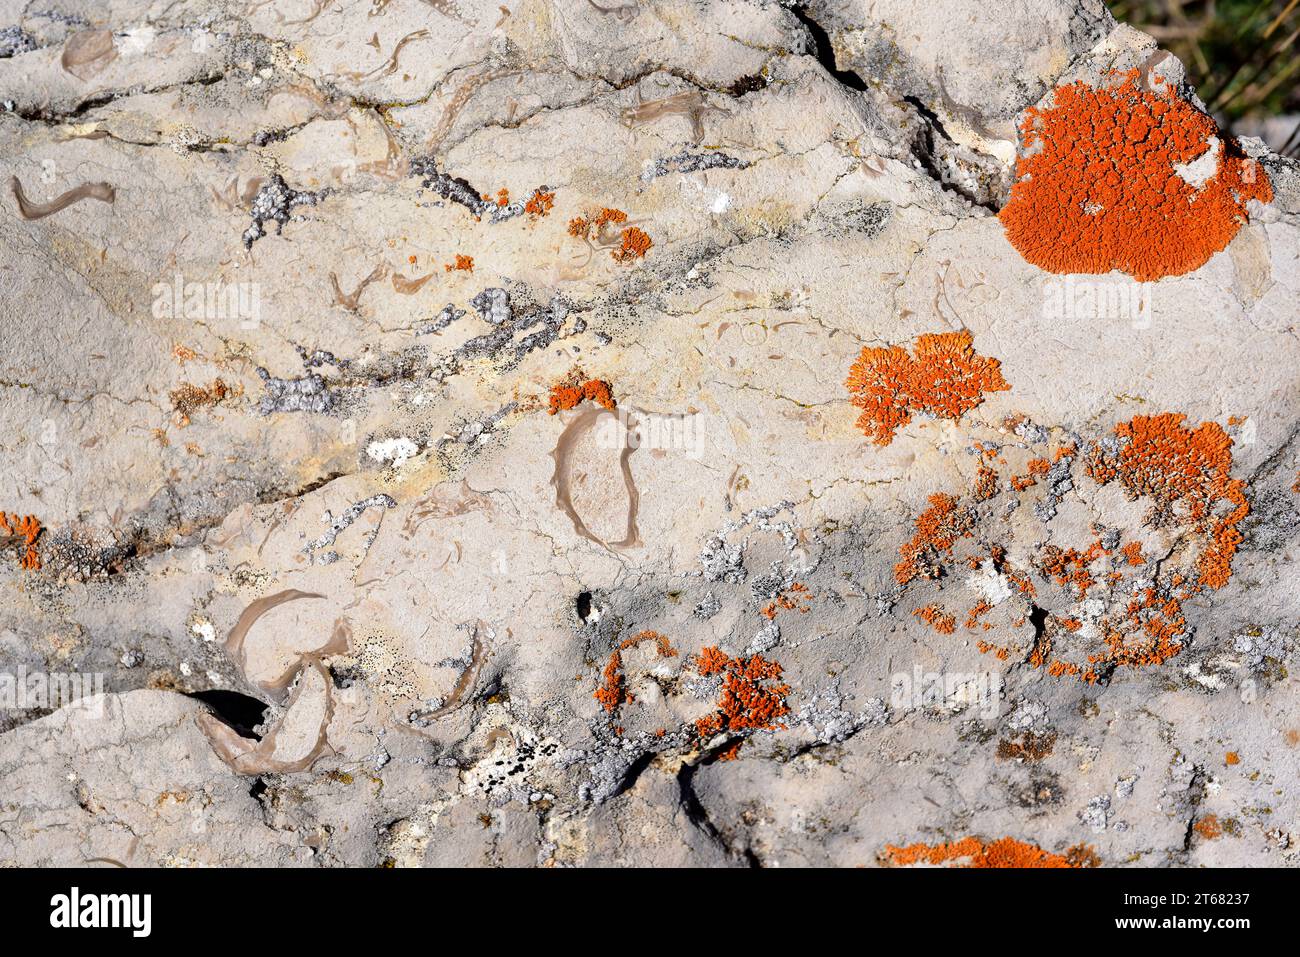 Exogyra flabellata bivalve mollusk fossil from Cretaceous. This photo was taken near Cantavieja, Teruel province, Aragon, Spain. Stock Photo